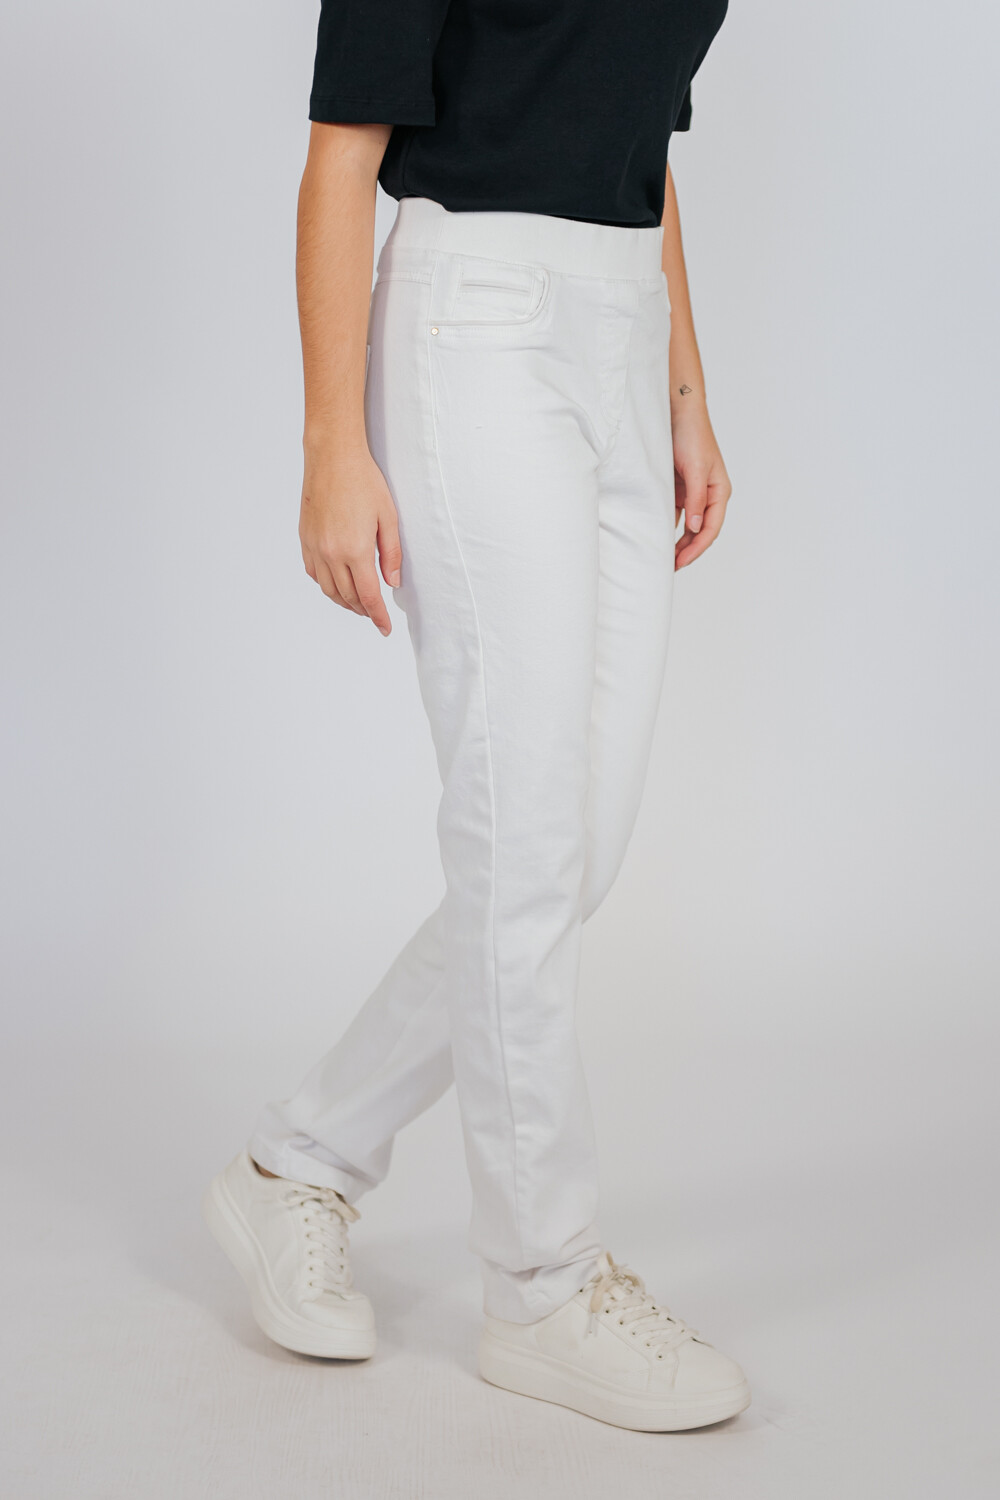 Pantalon Nyala Blanco